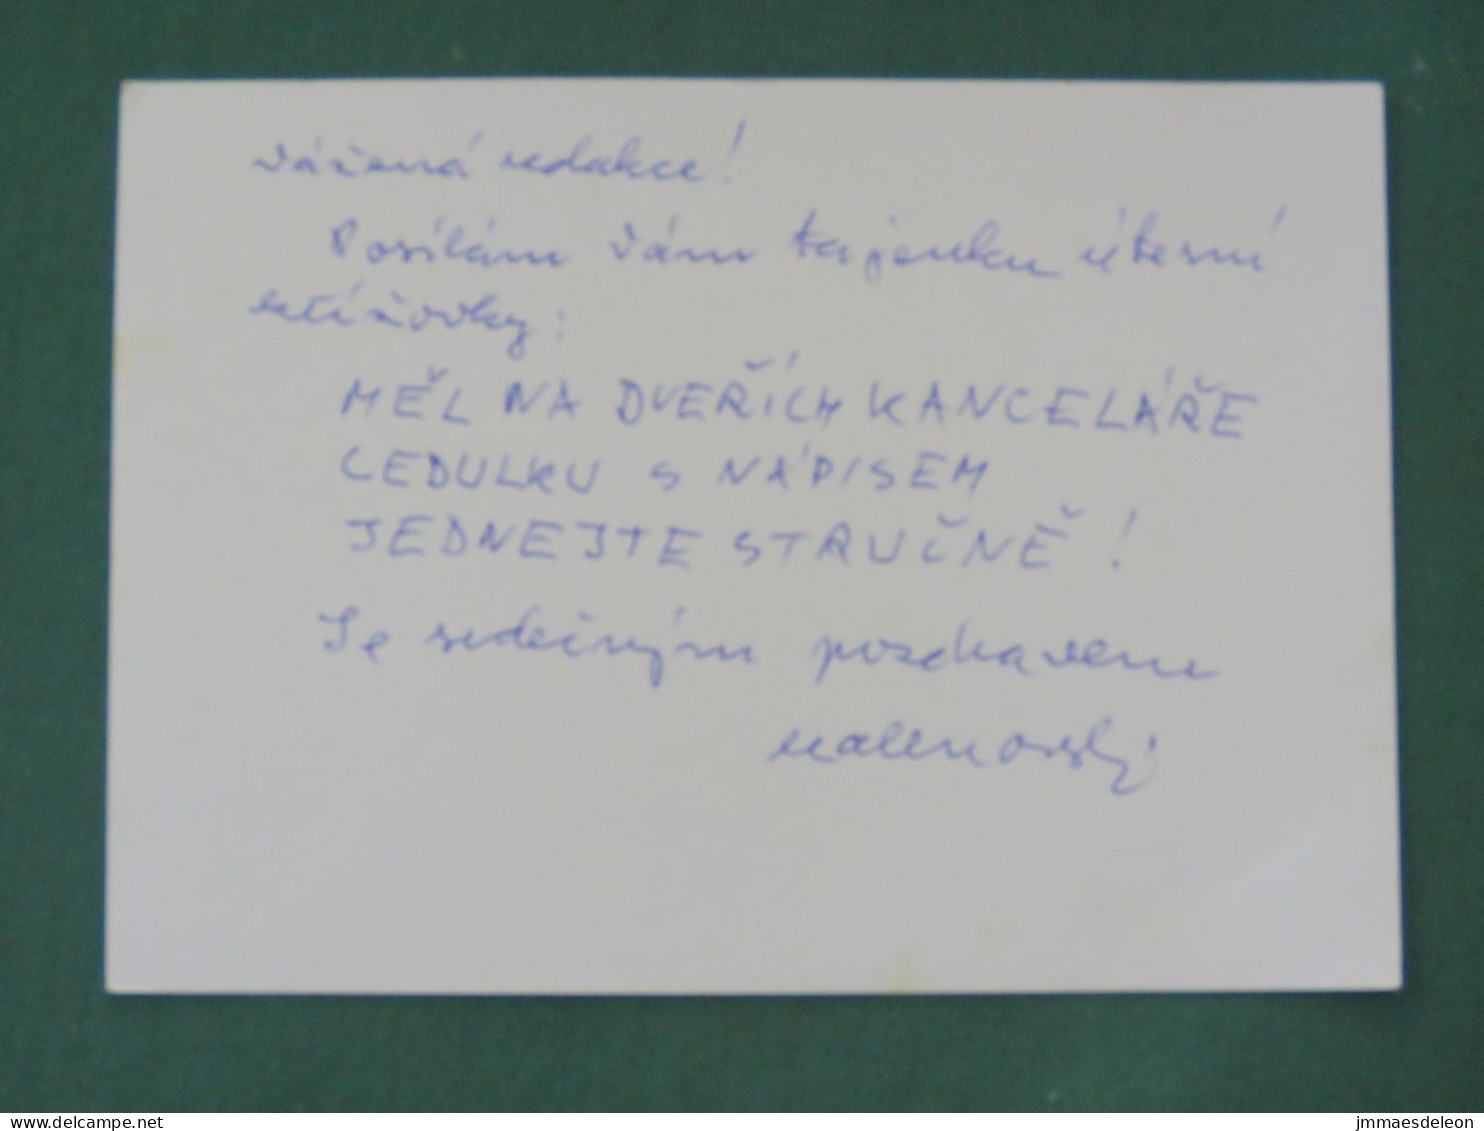 Czech Republic 1997 Stationery Postcard 4 Kcs "Prague 1998" Sent Locally From Brno, EMS Slogan - Storia Postale